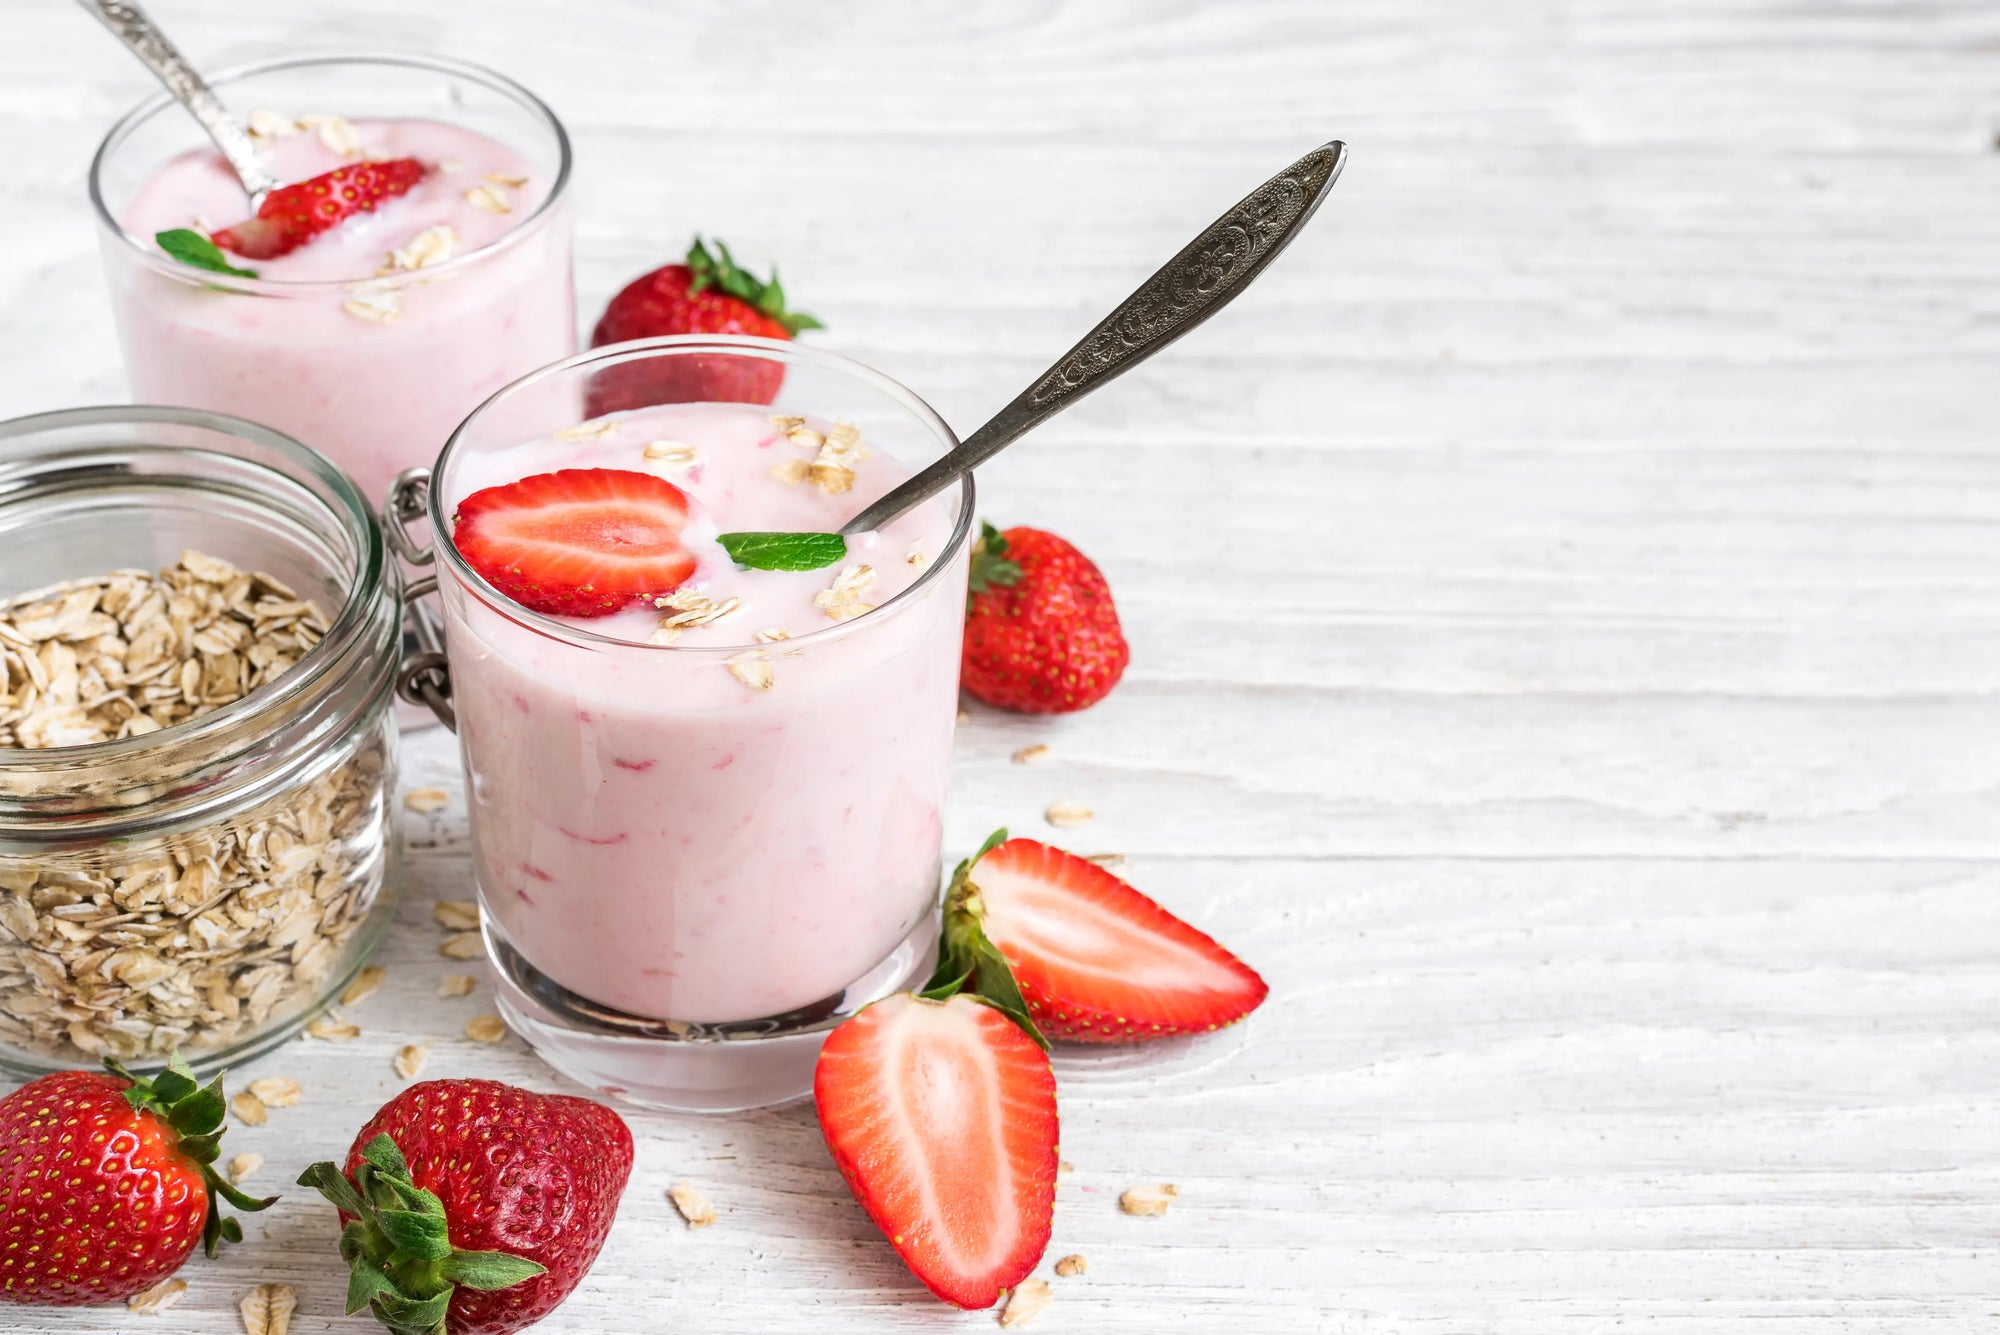 Make Delicious Vegan Oat Milk Yogurt with This Easy Recipe